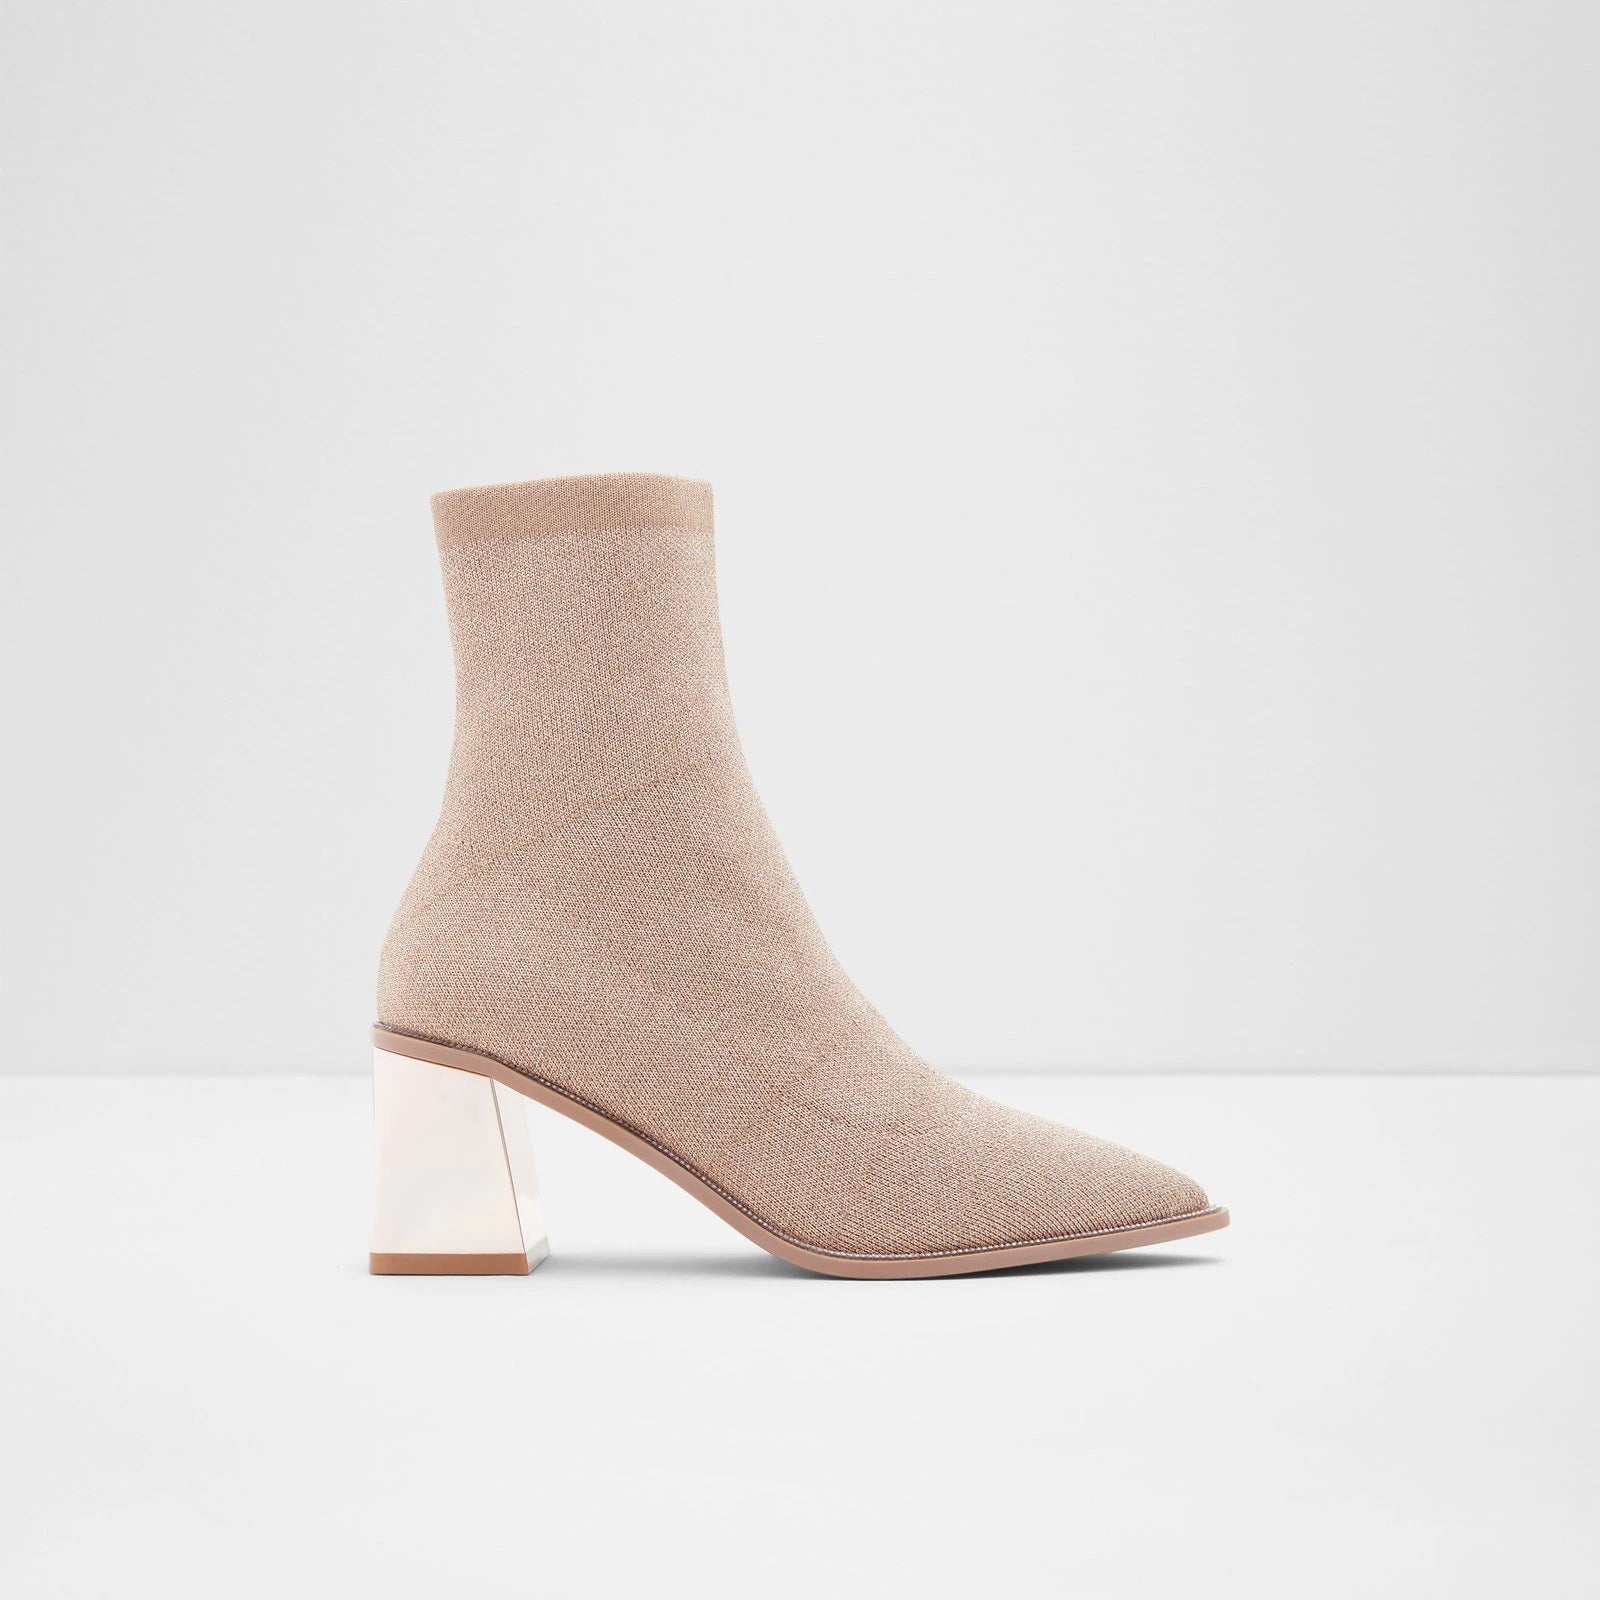 Aldo Women’s Heeled Ankle Boots Galalith (Bone)